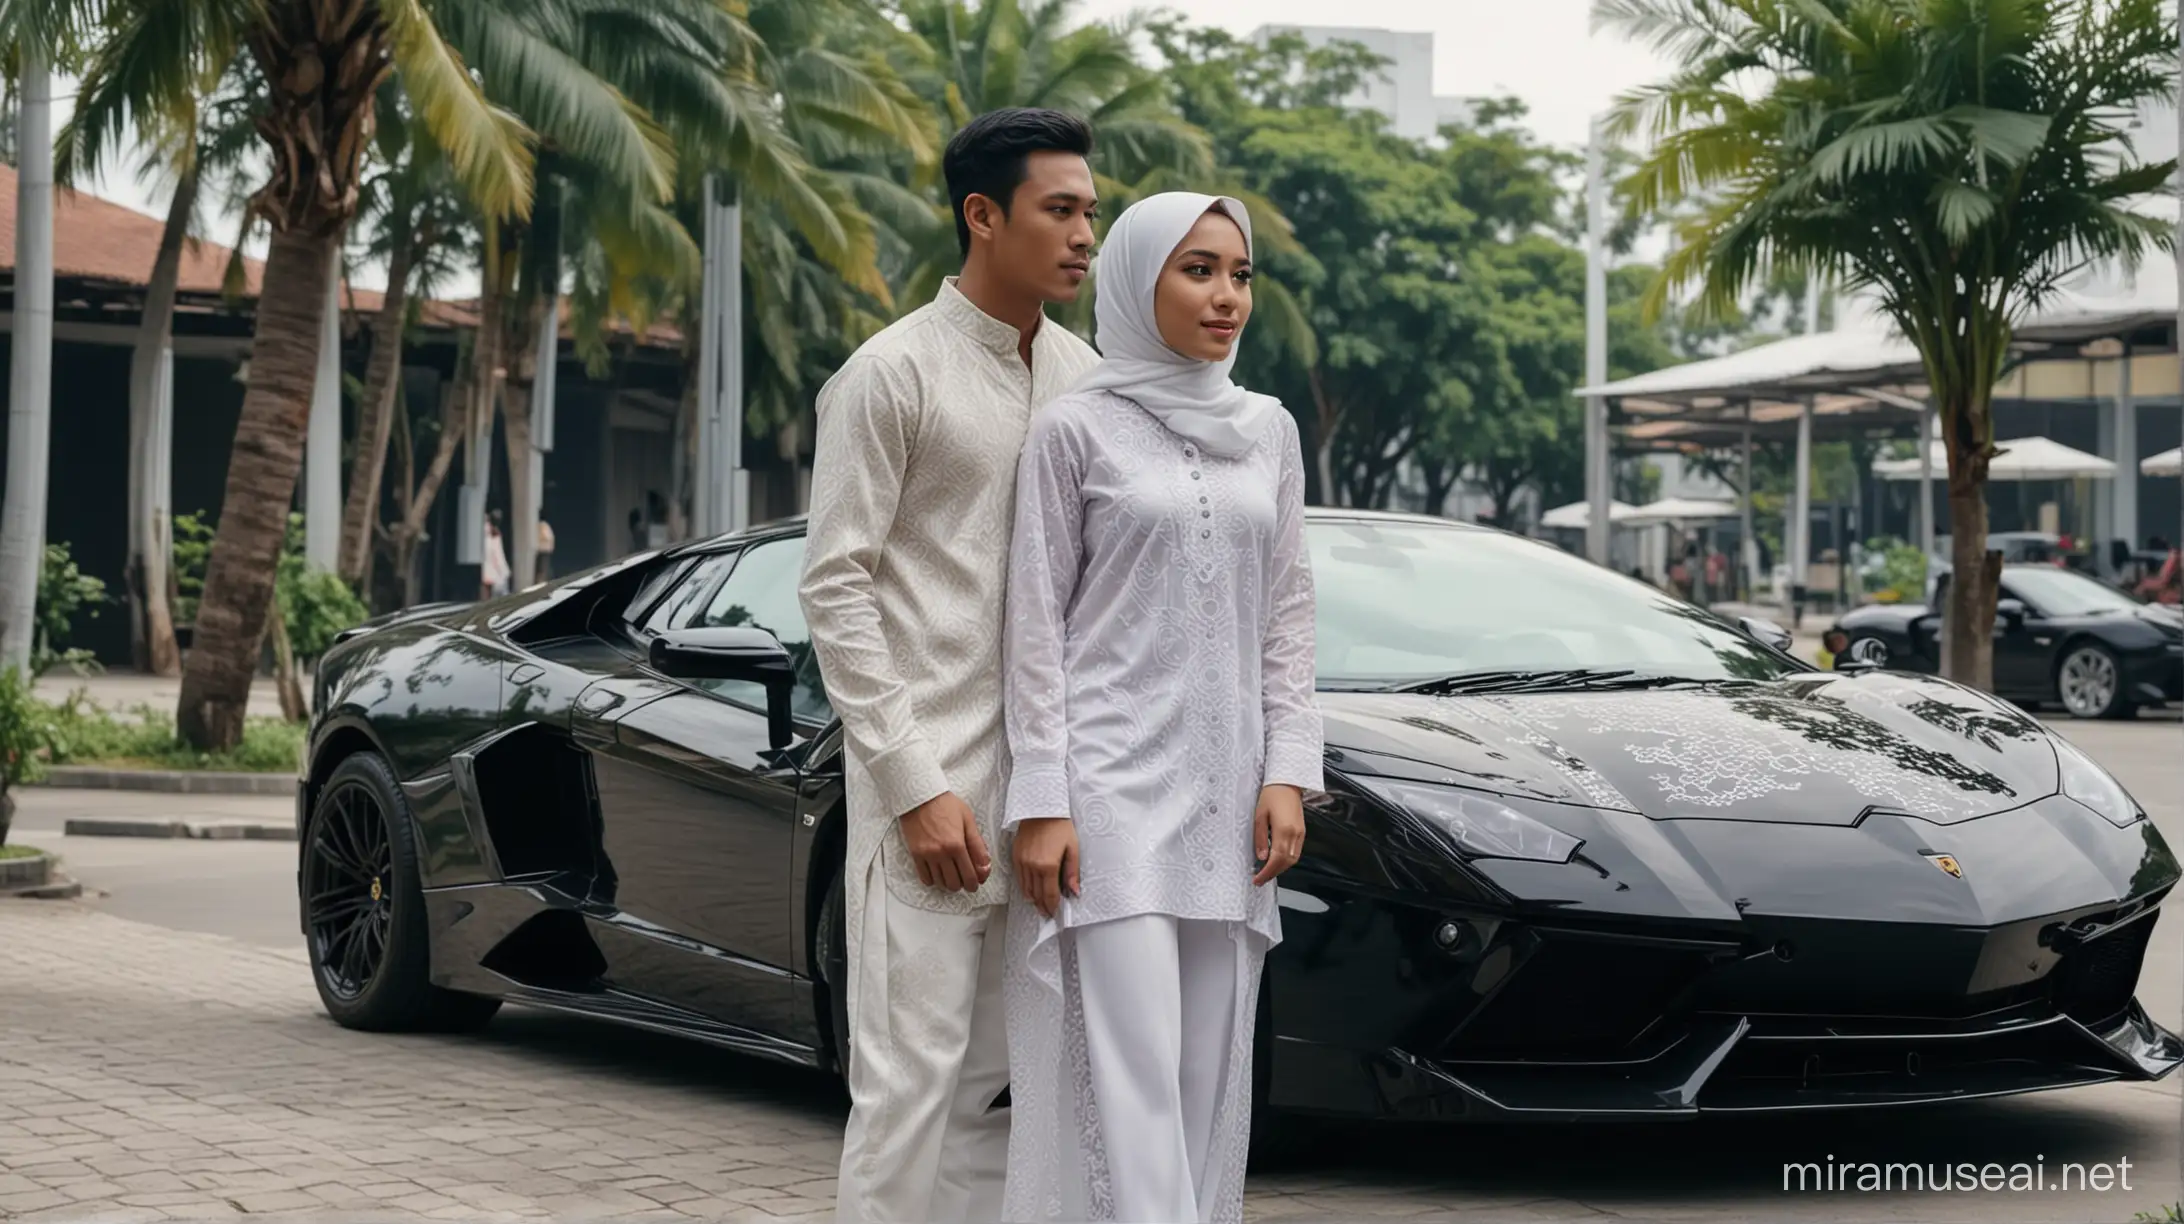 Modern Indonesian Fashion Man in Batik Shirt and Girl in Hijab near Lamborghini